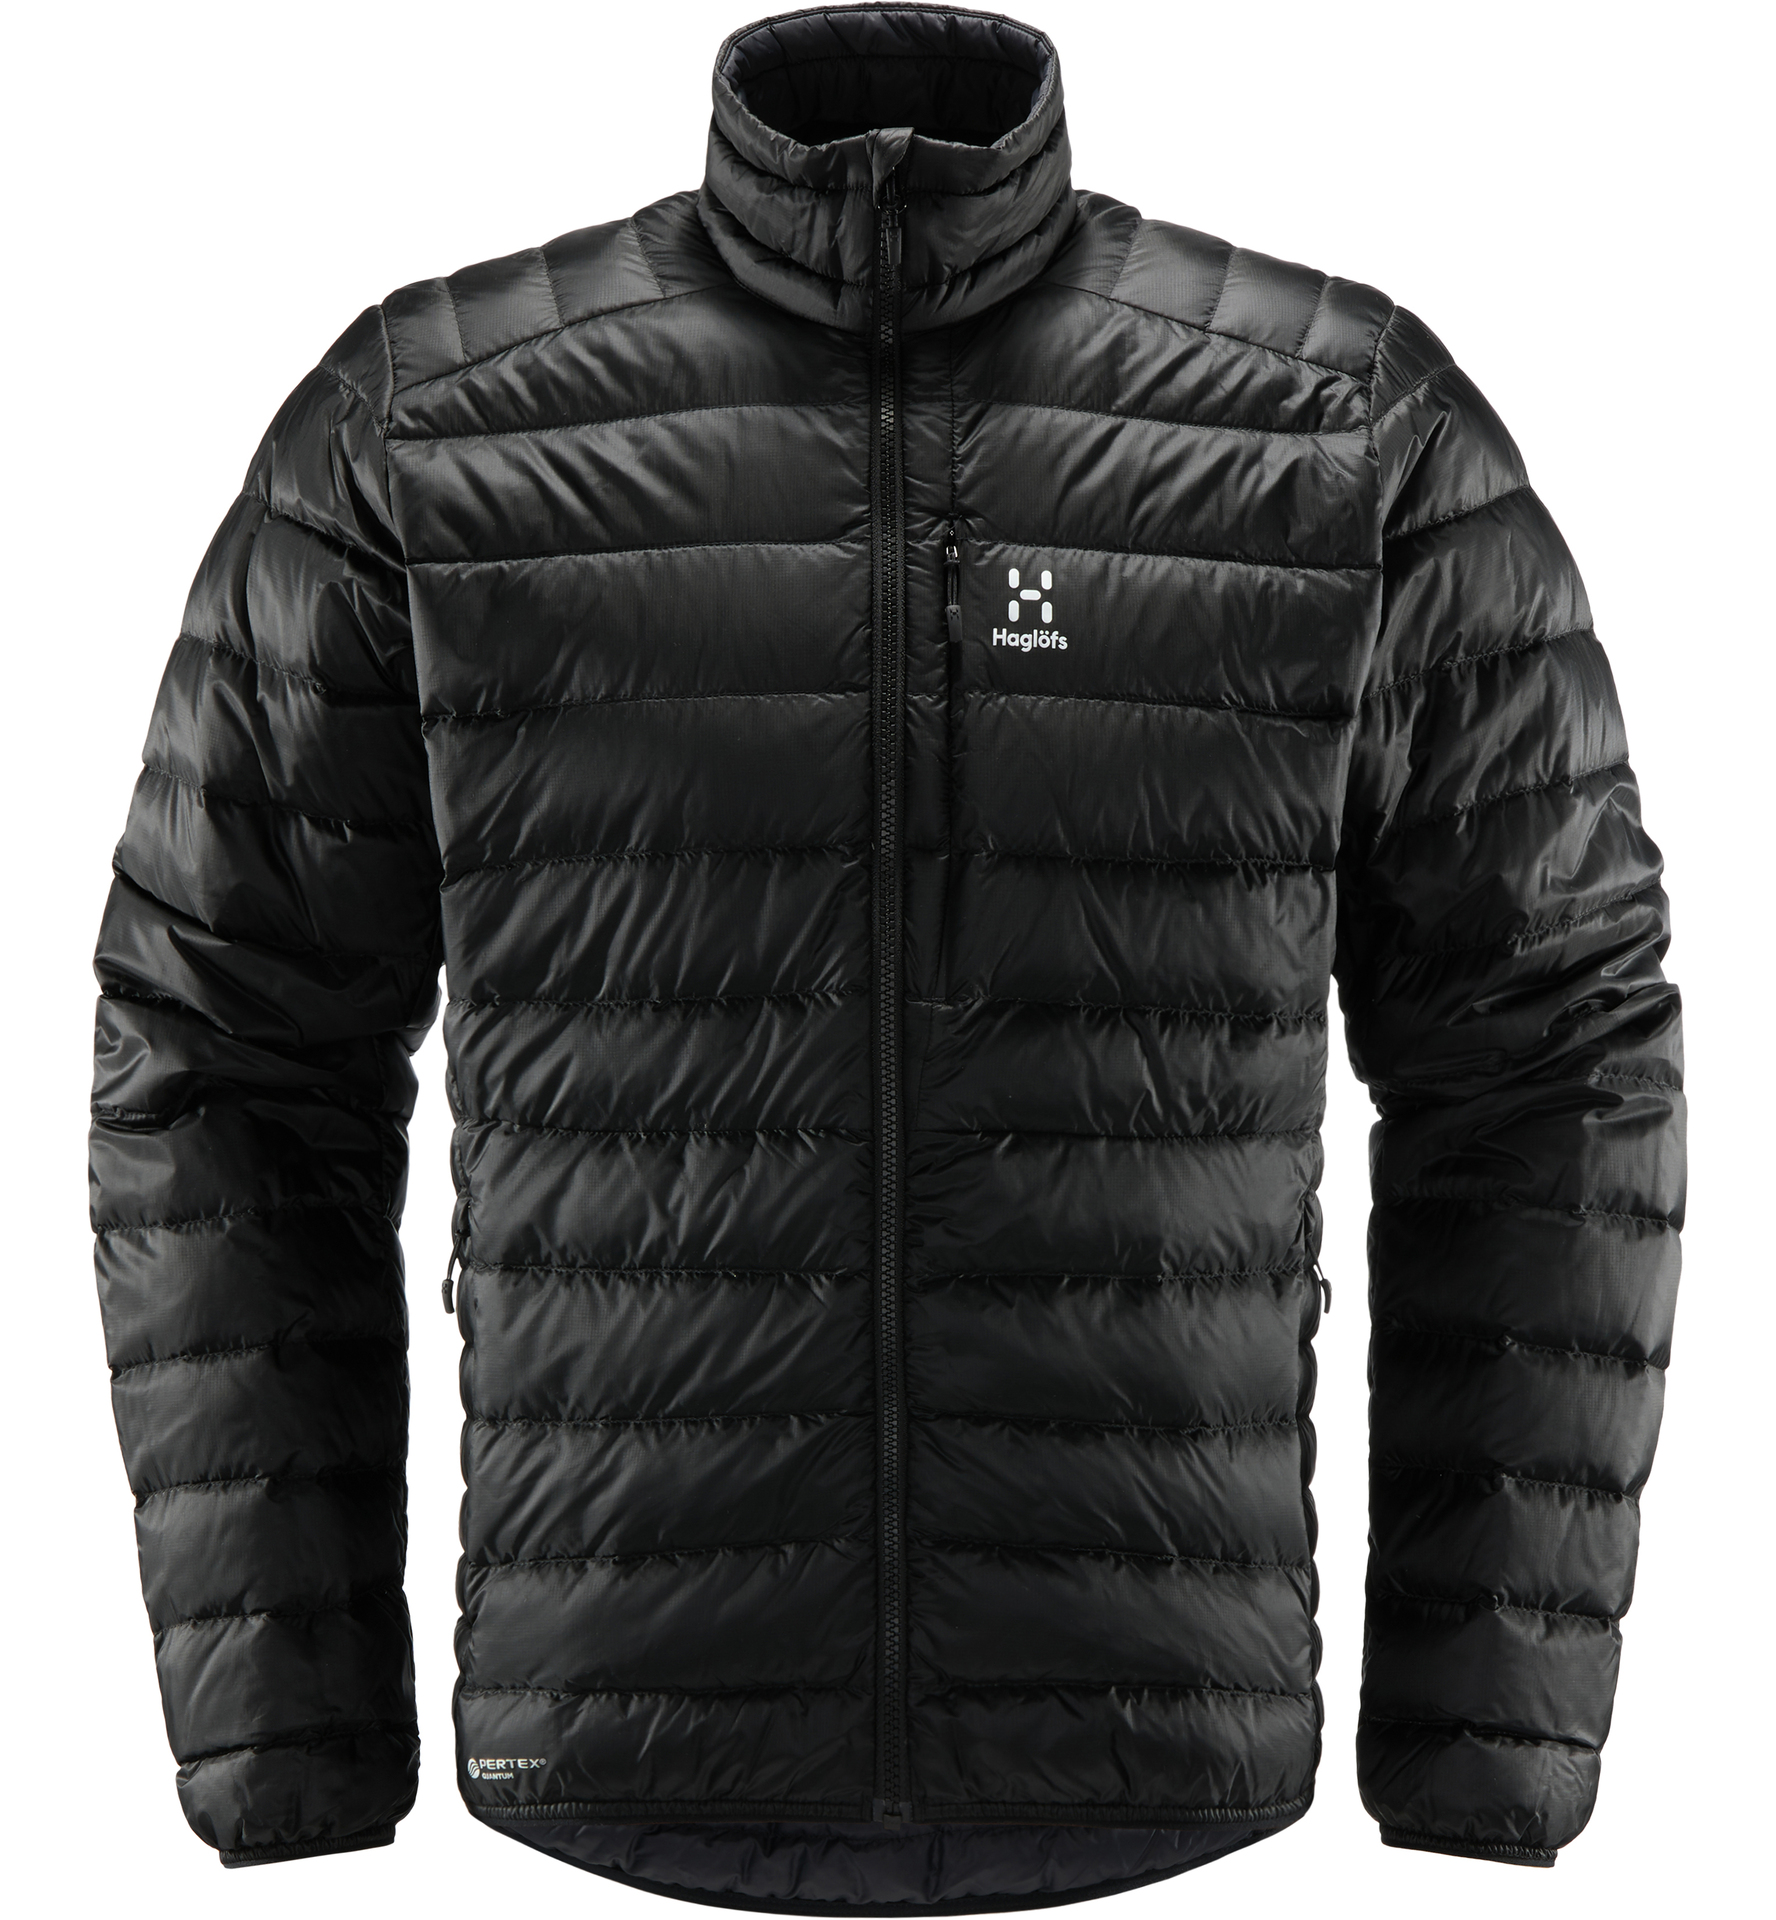 Roc Down Jacket Men | True Black | Insulated jackets | Hiking